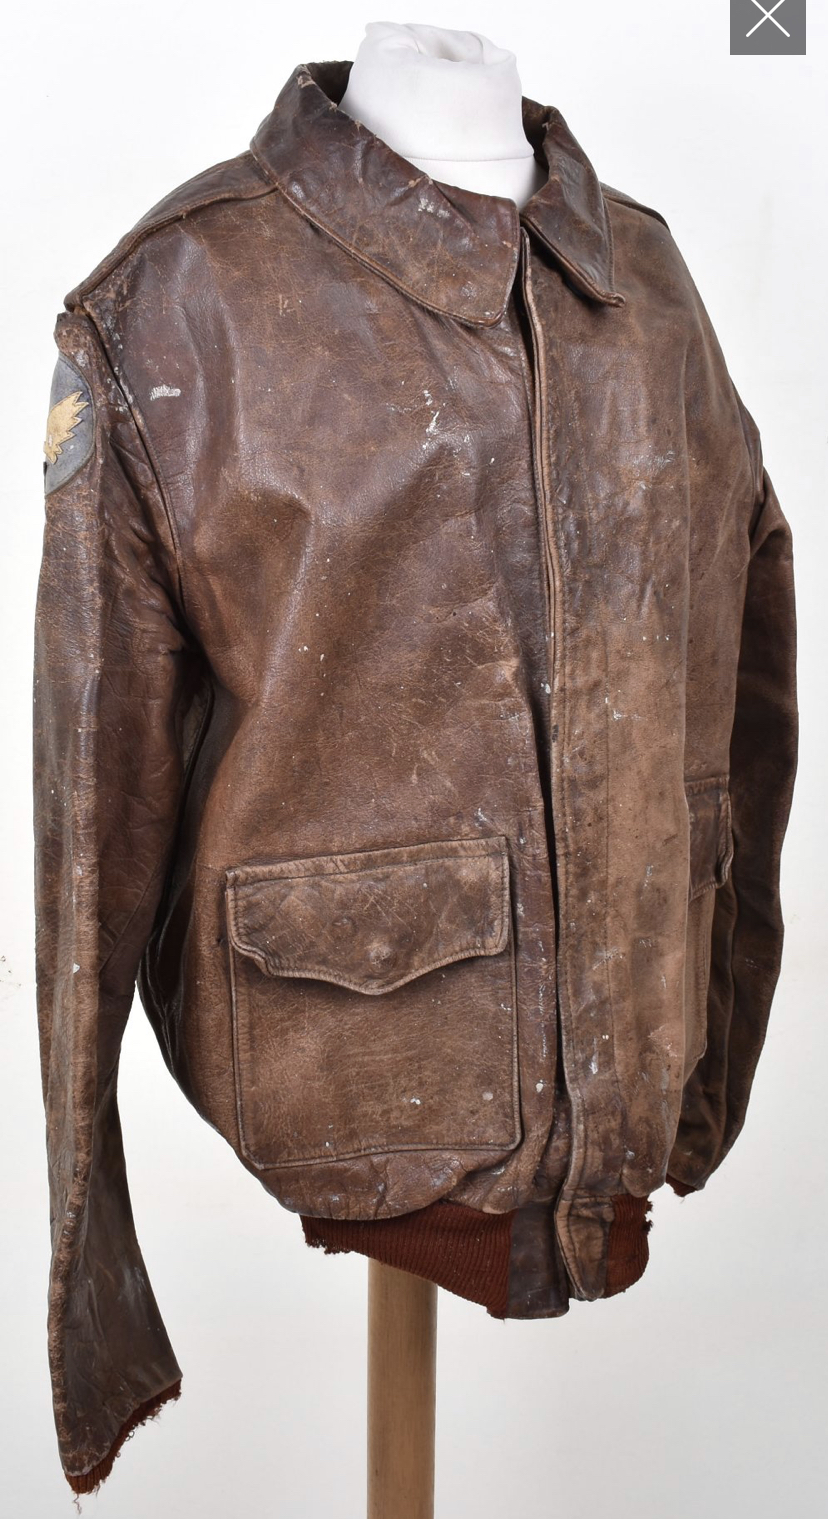 Original CBI Aero A2 | Vintage Leather Jackets Forum